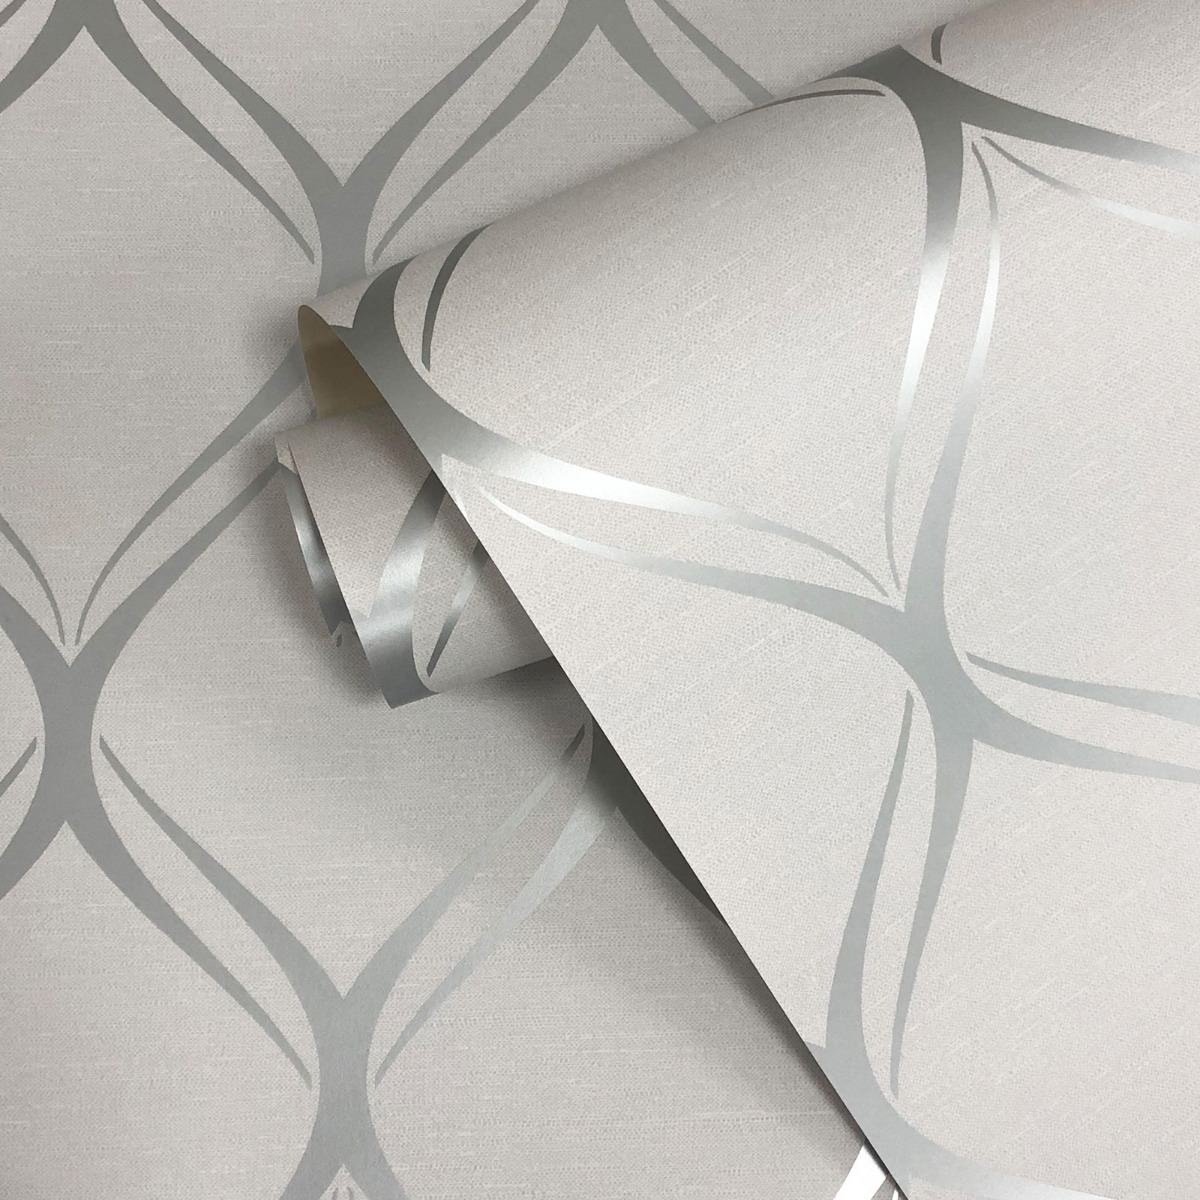 Clifton Wave Geometric Wallpaper Grey / Silver WOW41961